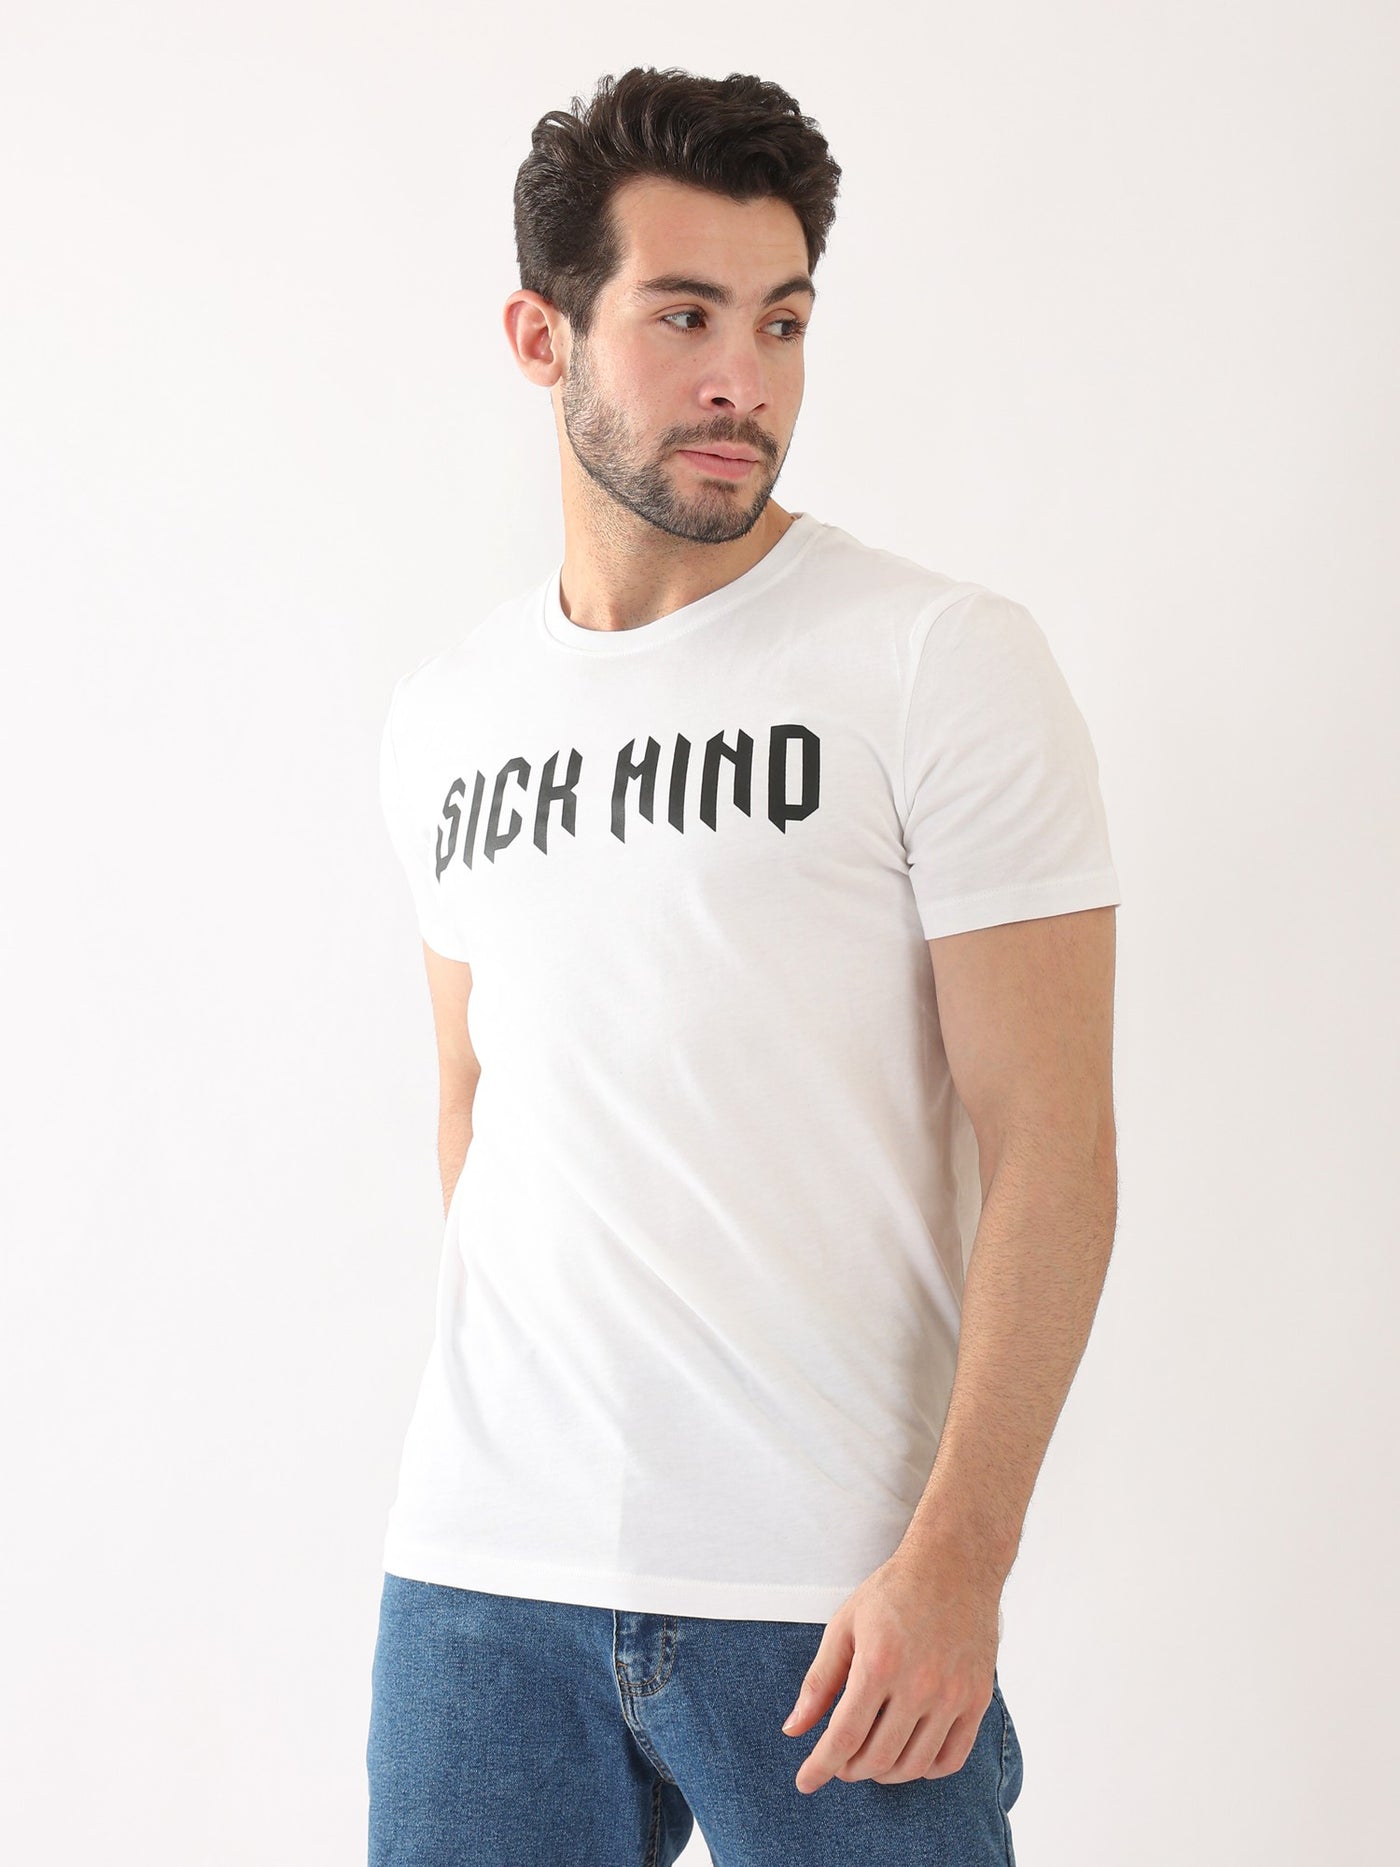 T-Shirt - "Sick Mind" - Half Sleeves